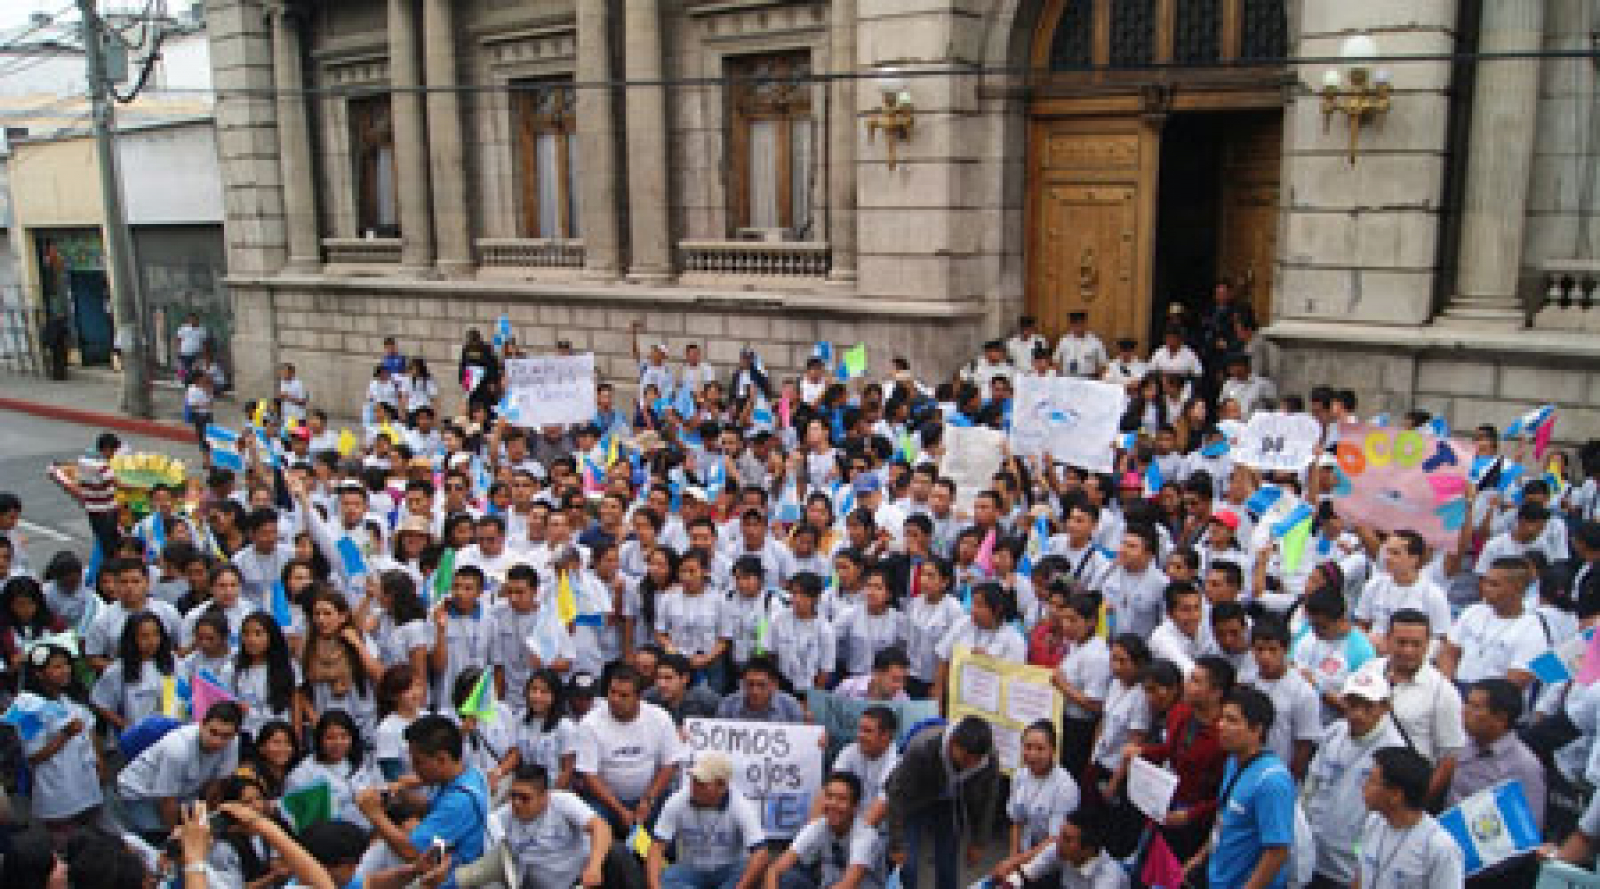 NDI and Partners Publish Analyses on Political Developments in Guatemala